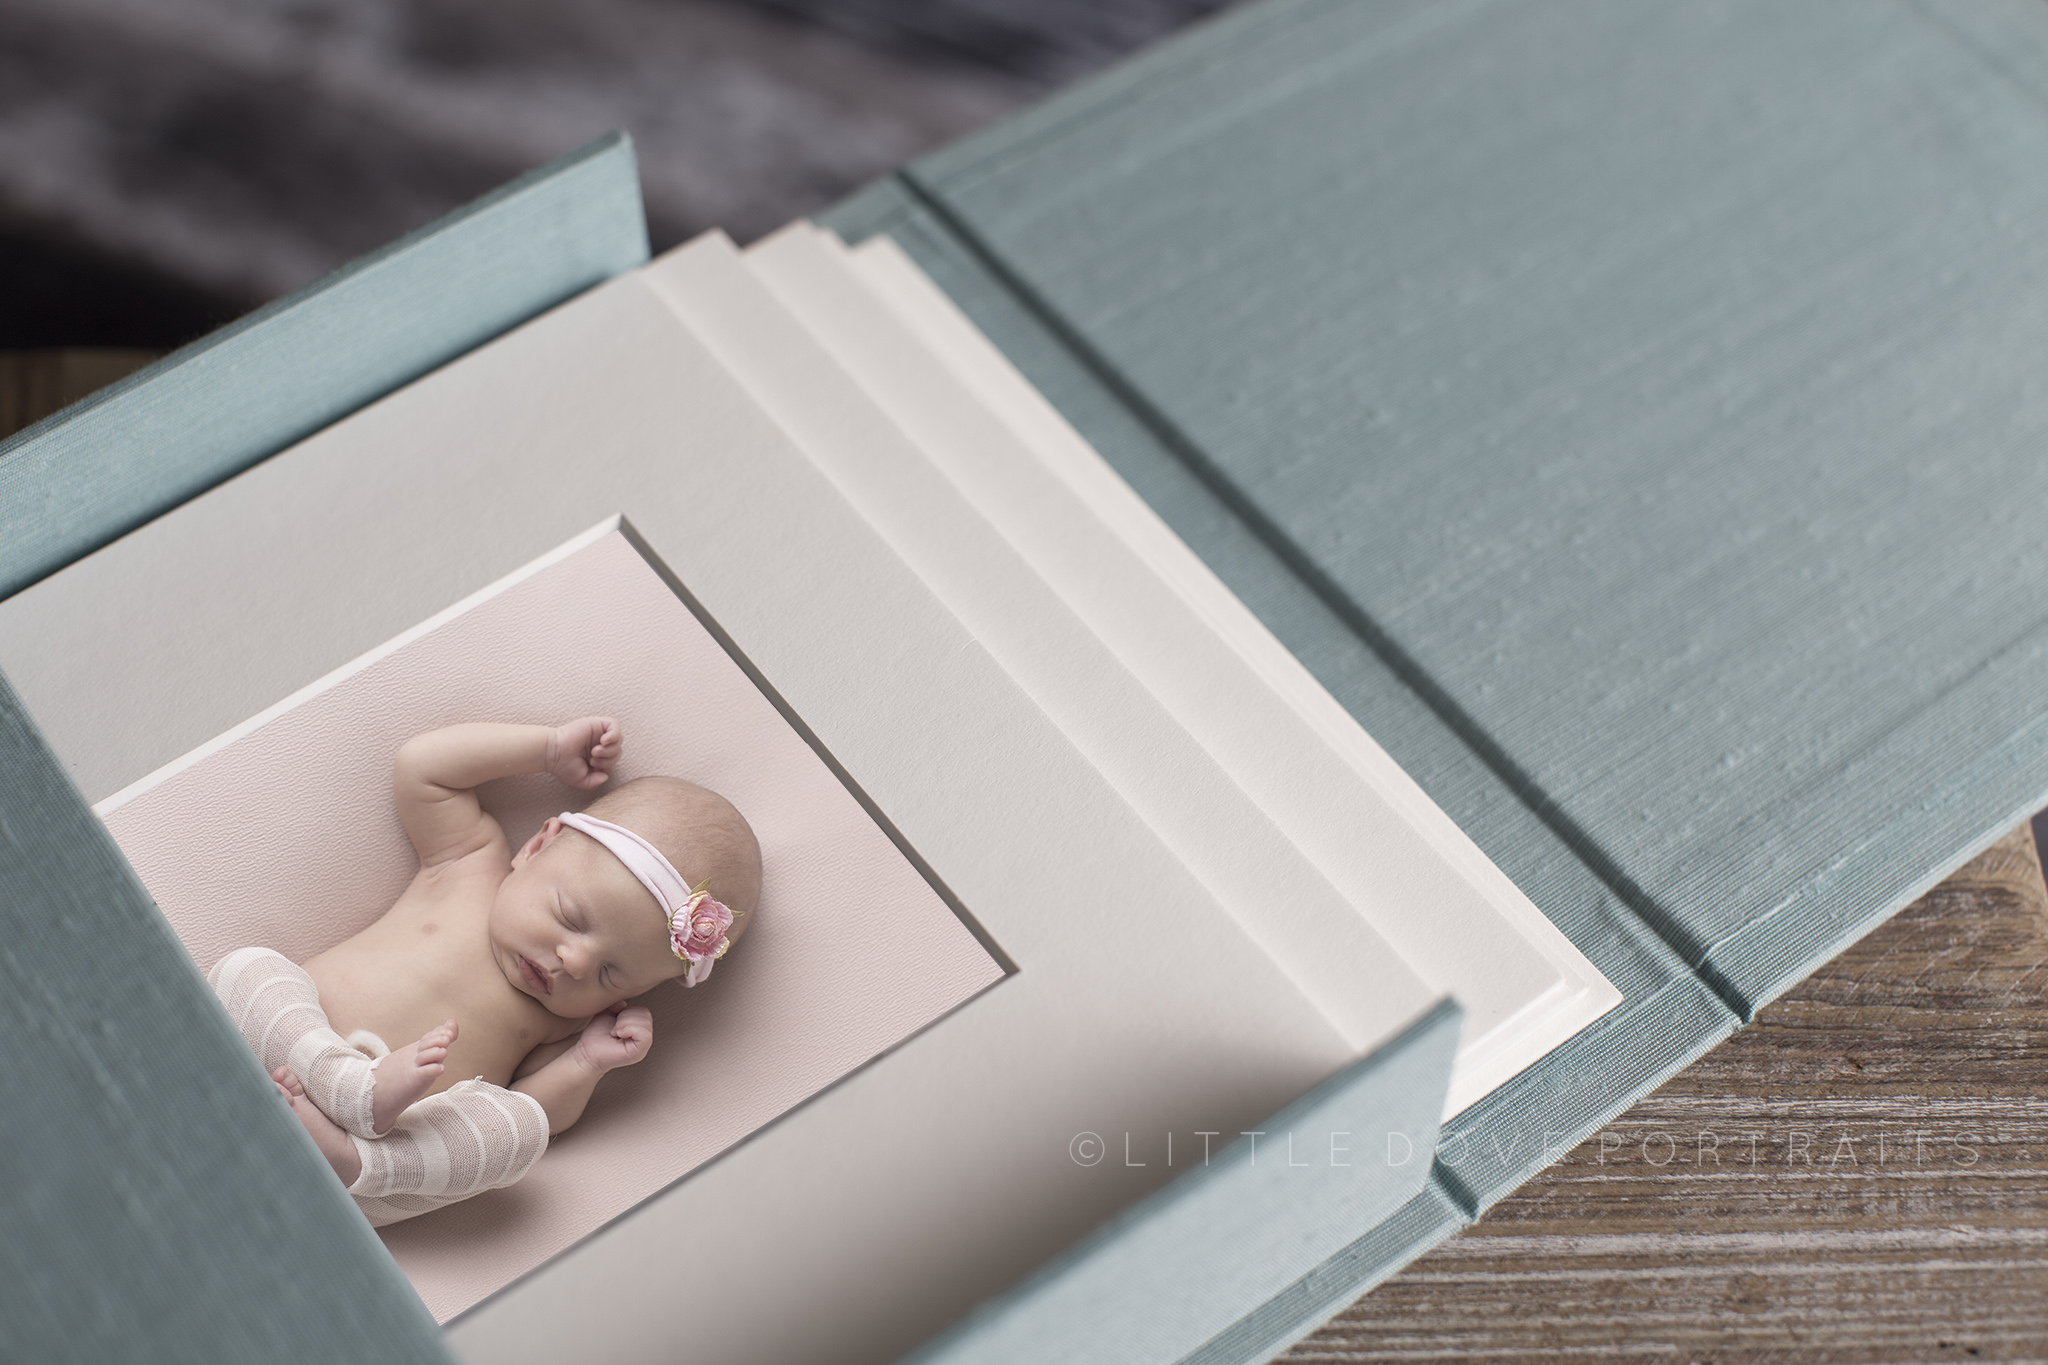 Little Dove Portraits - Dallas Newborn Photographer #newbornphotographer #album 